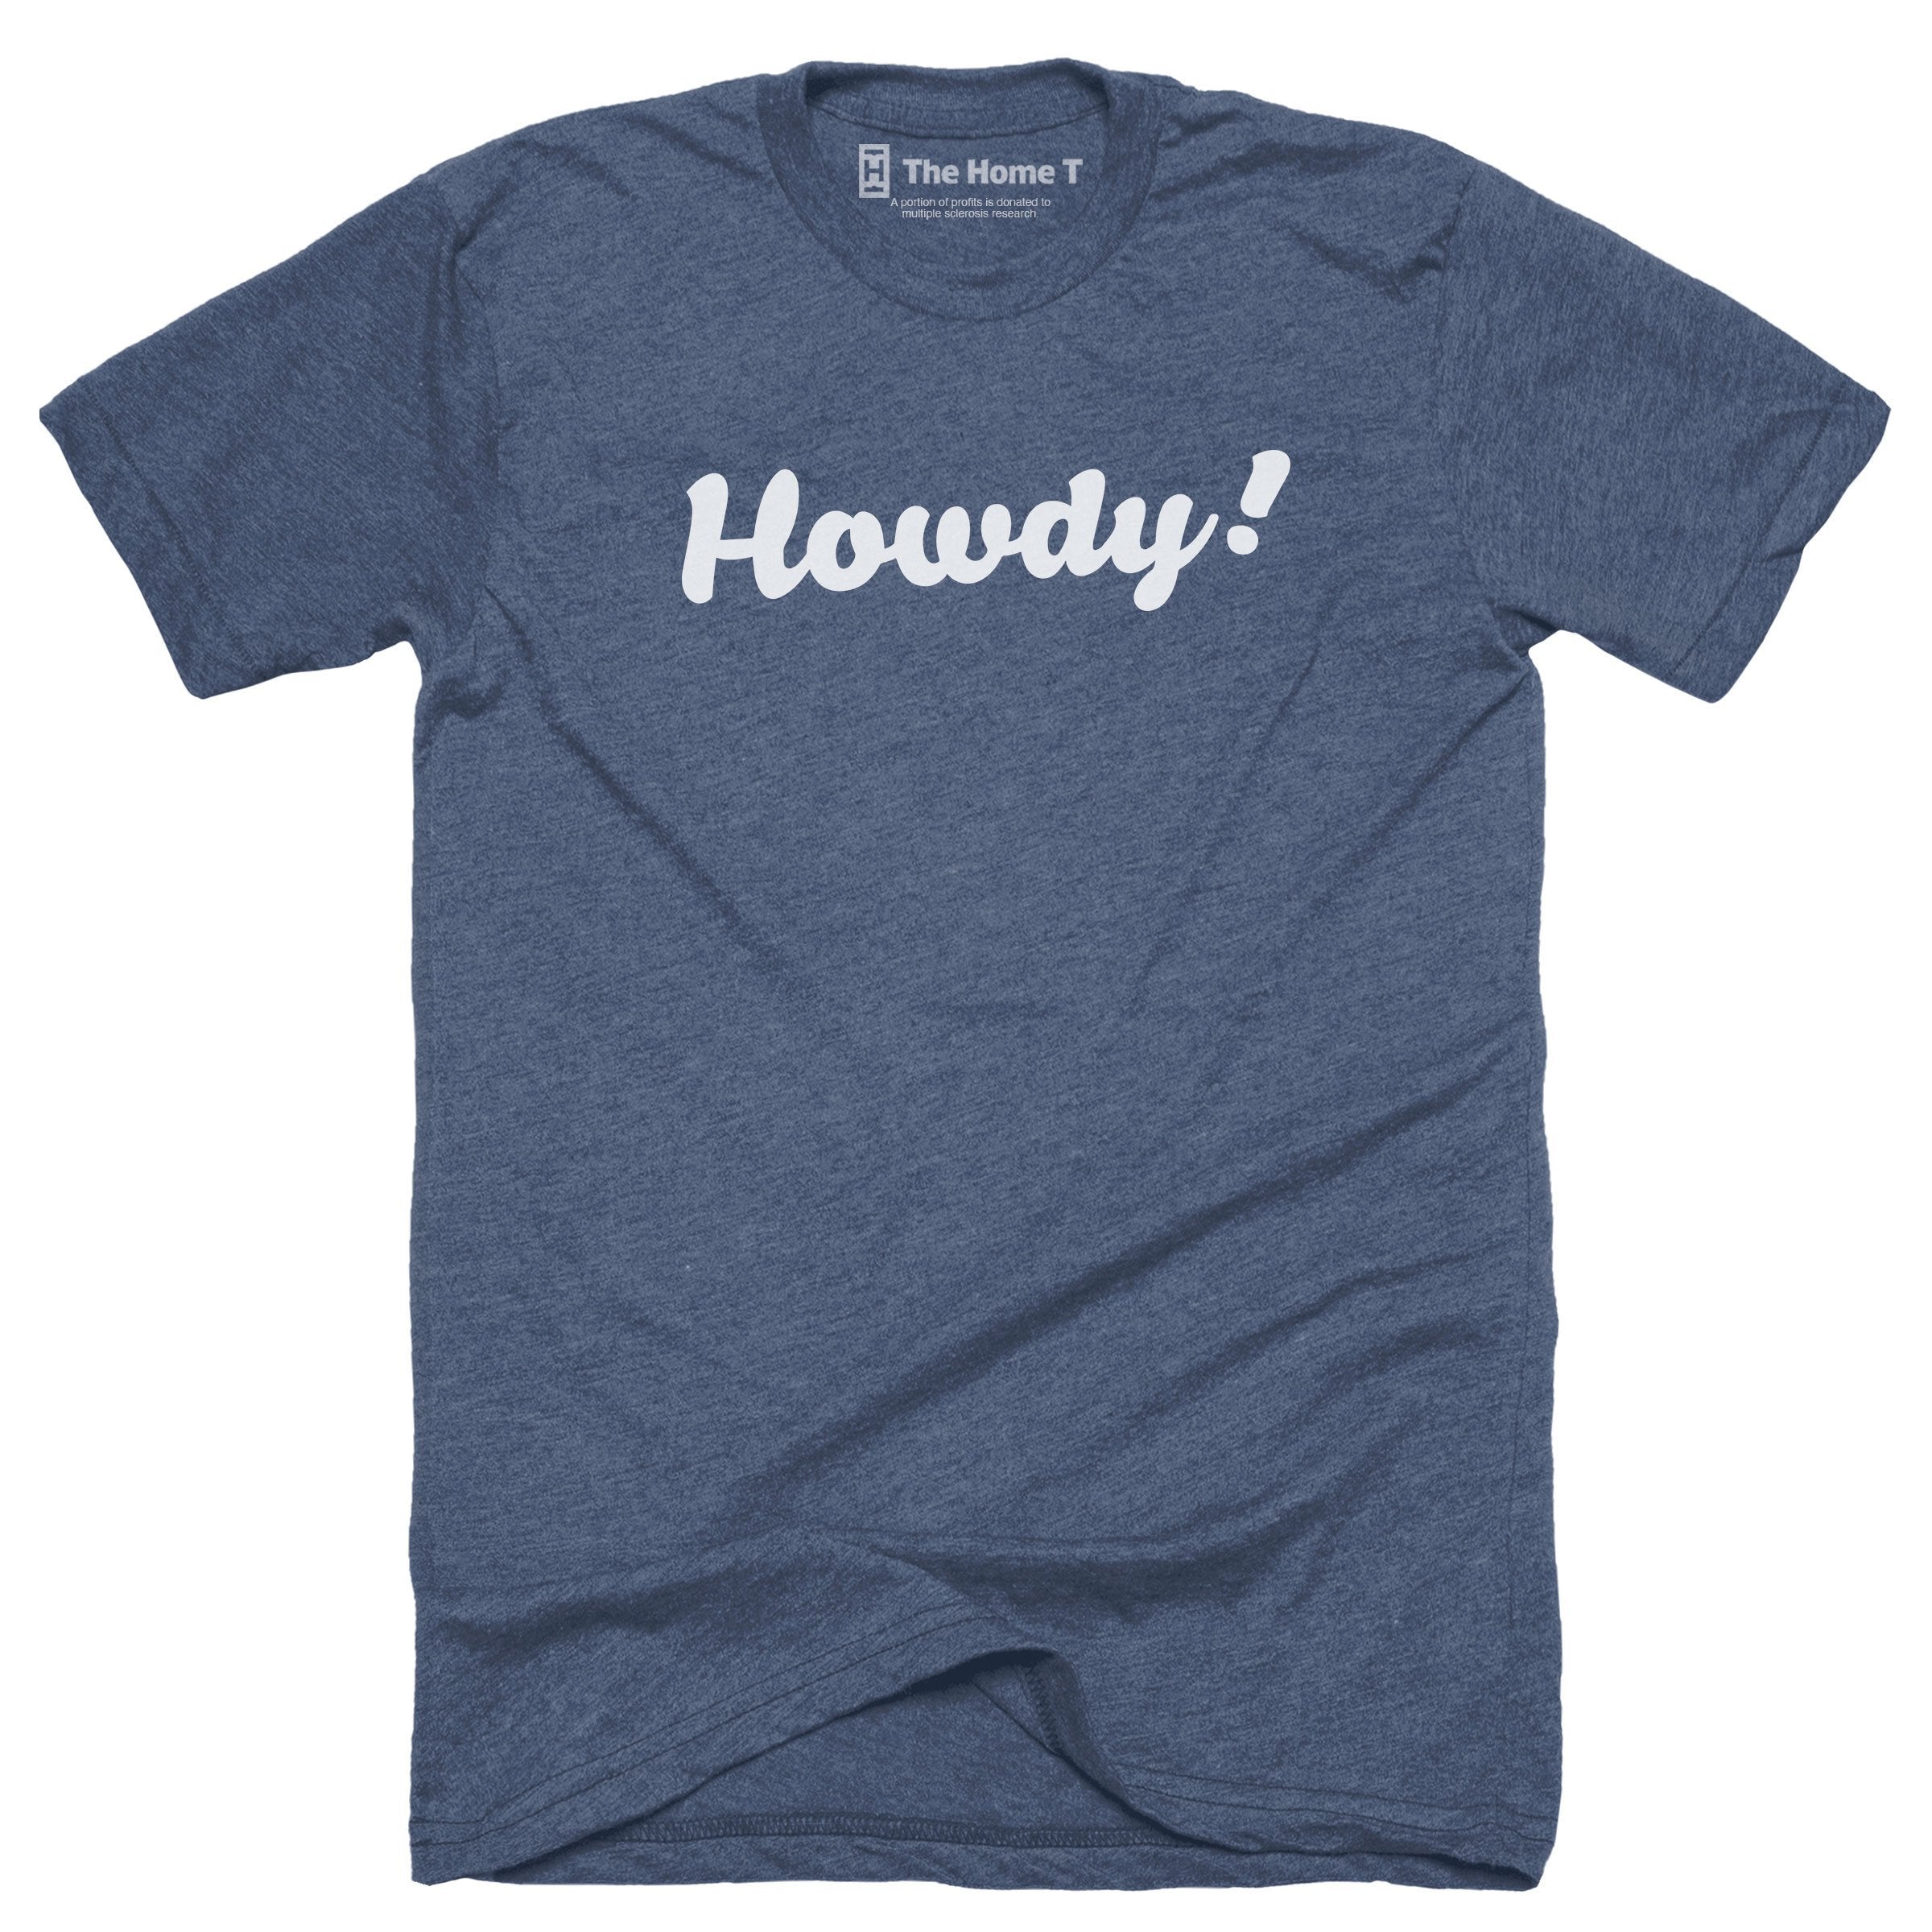 Howdy! Crew neck The Home T XS Navy Crew Neck T-Shirt